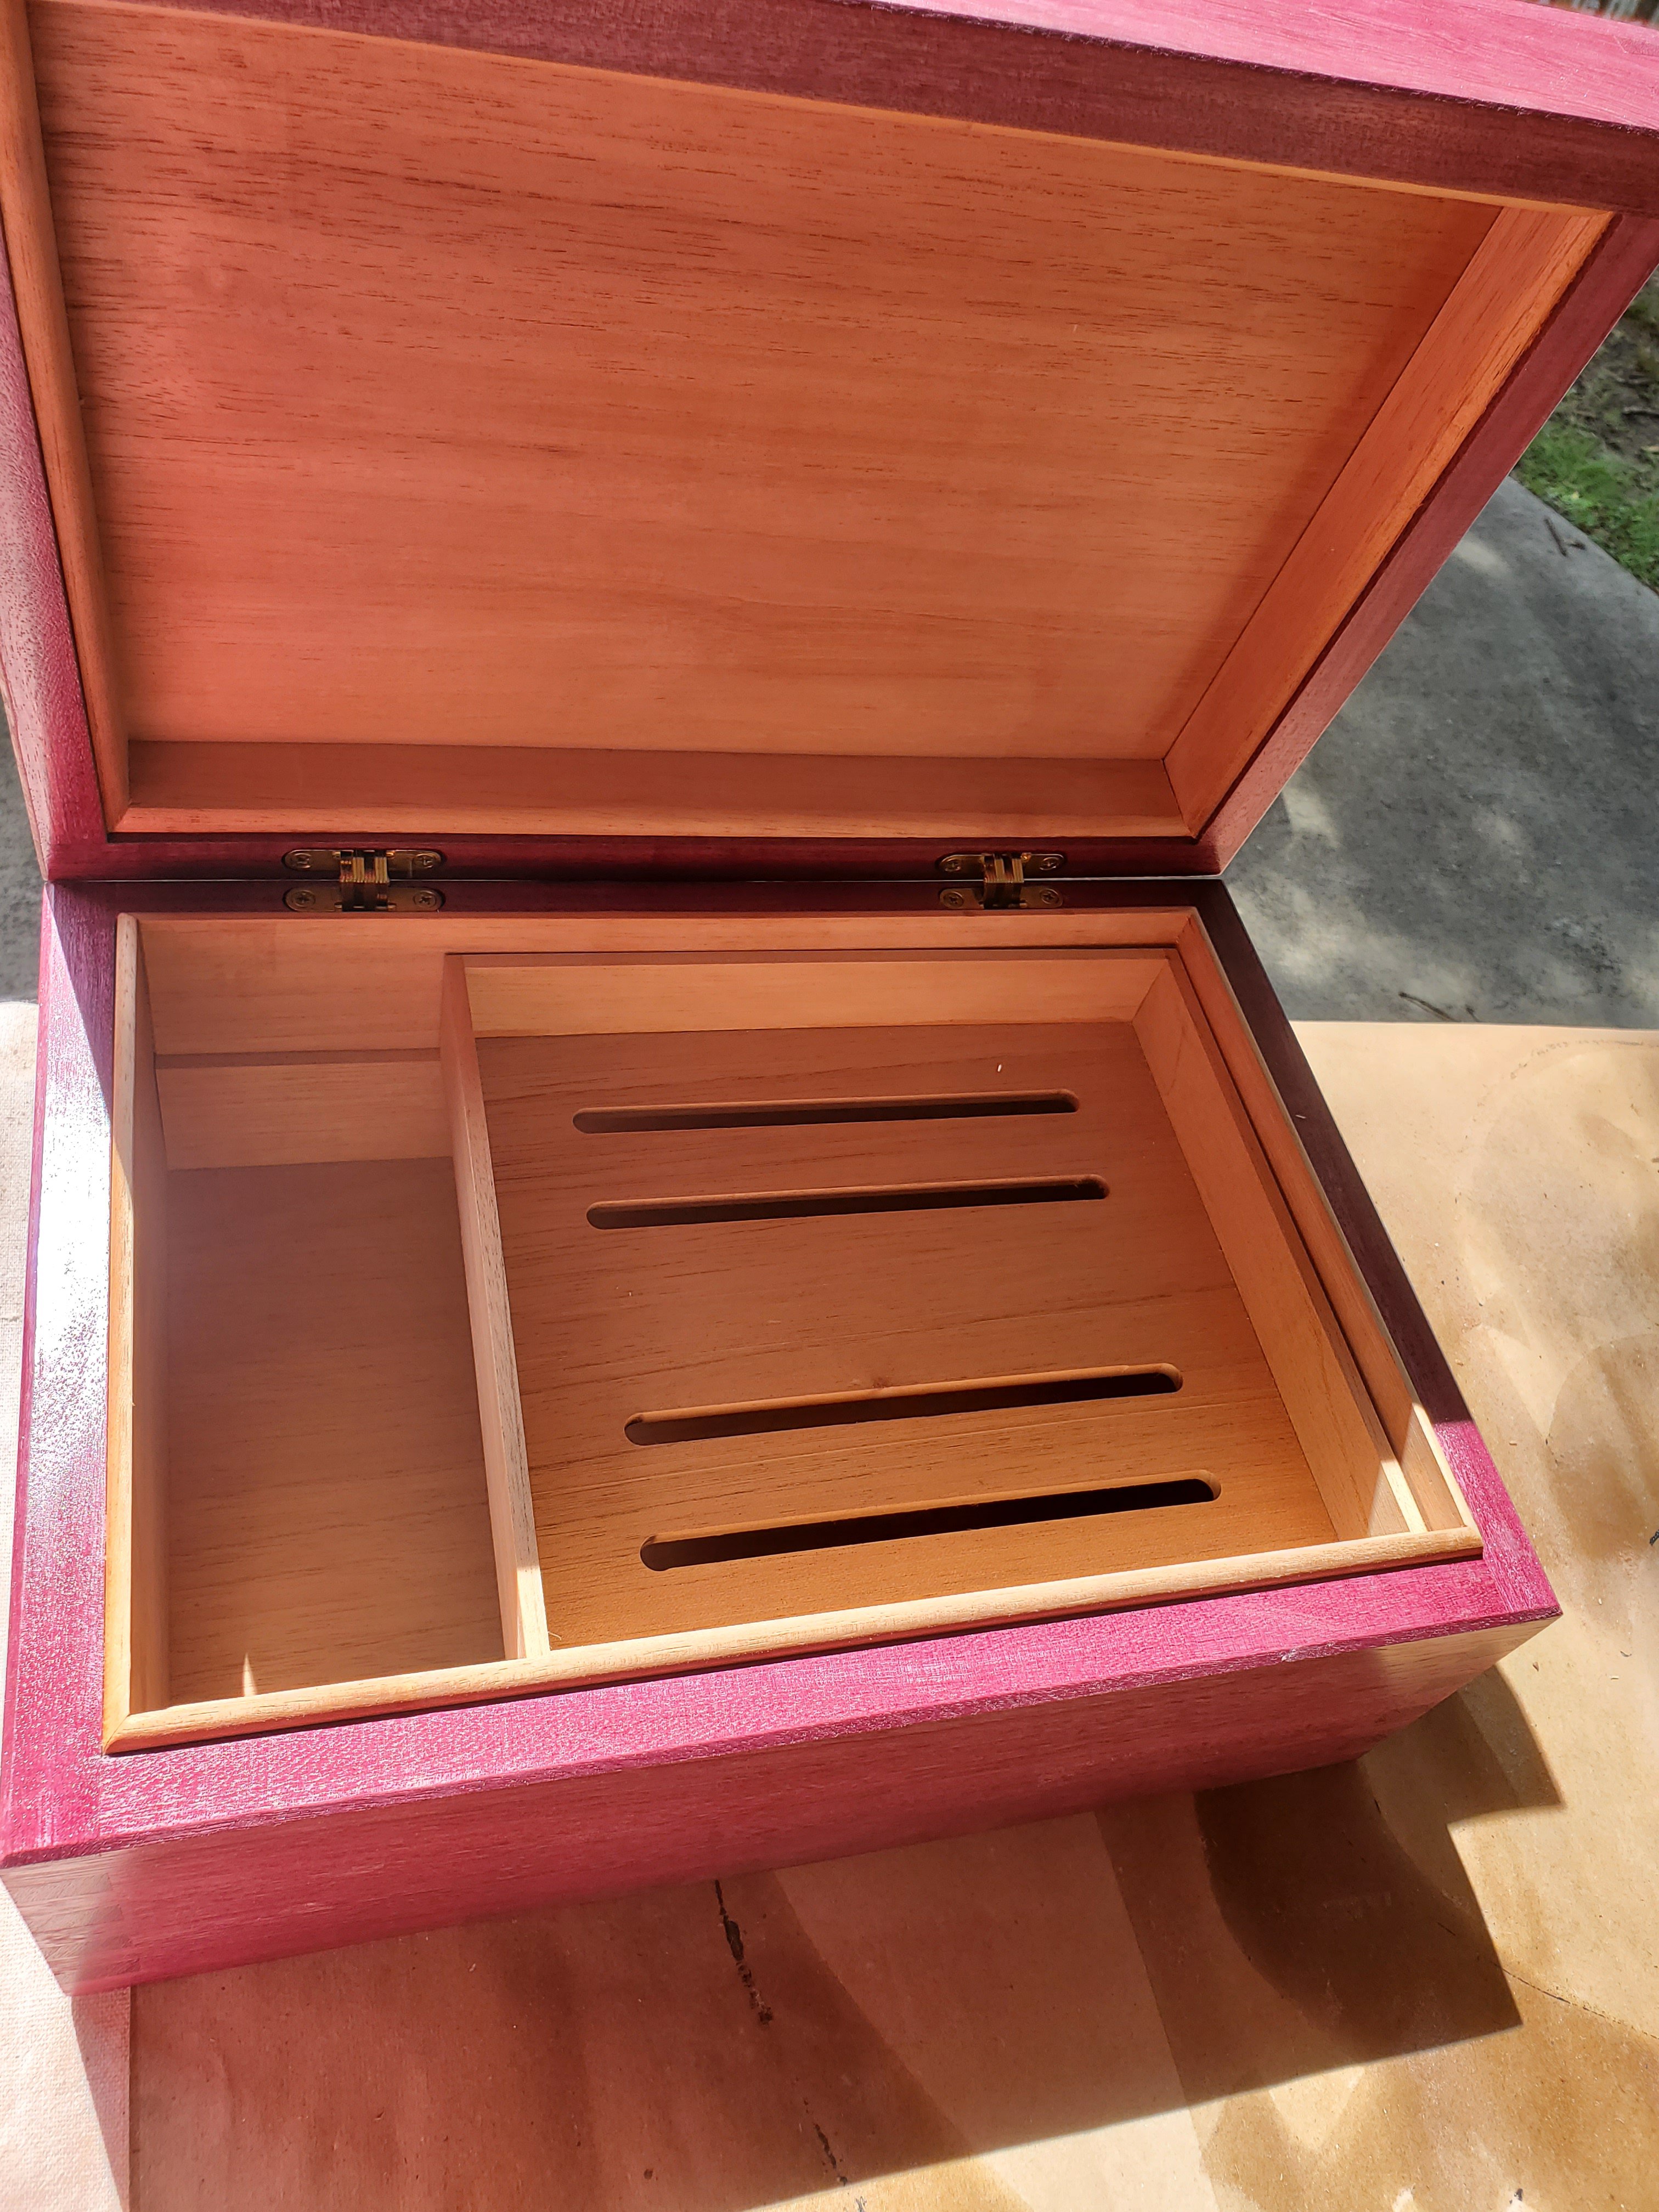 Purpleheart Humidor Inside with tray